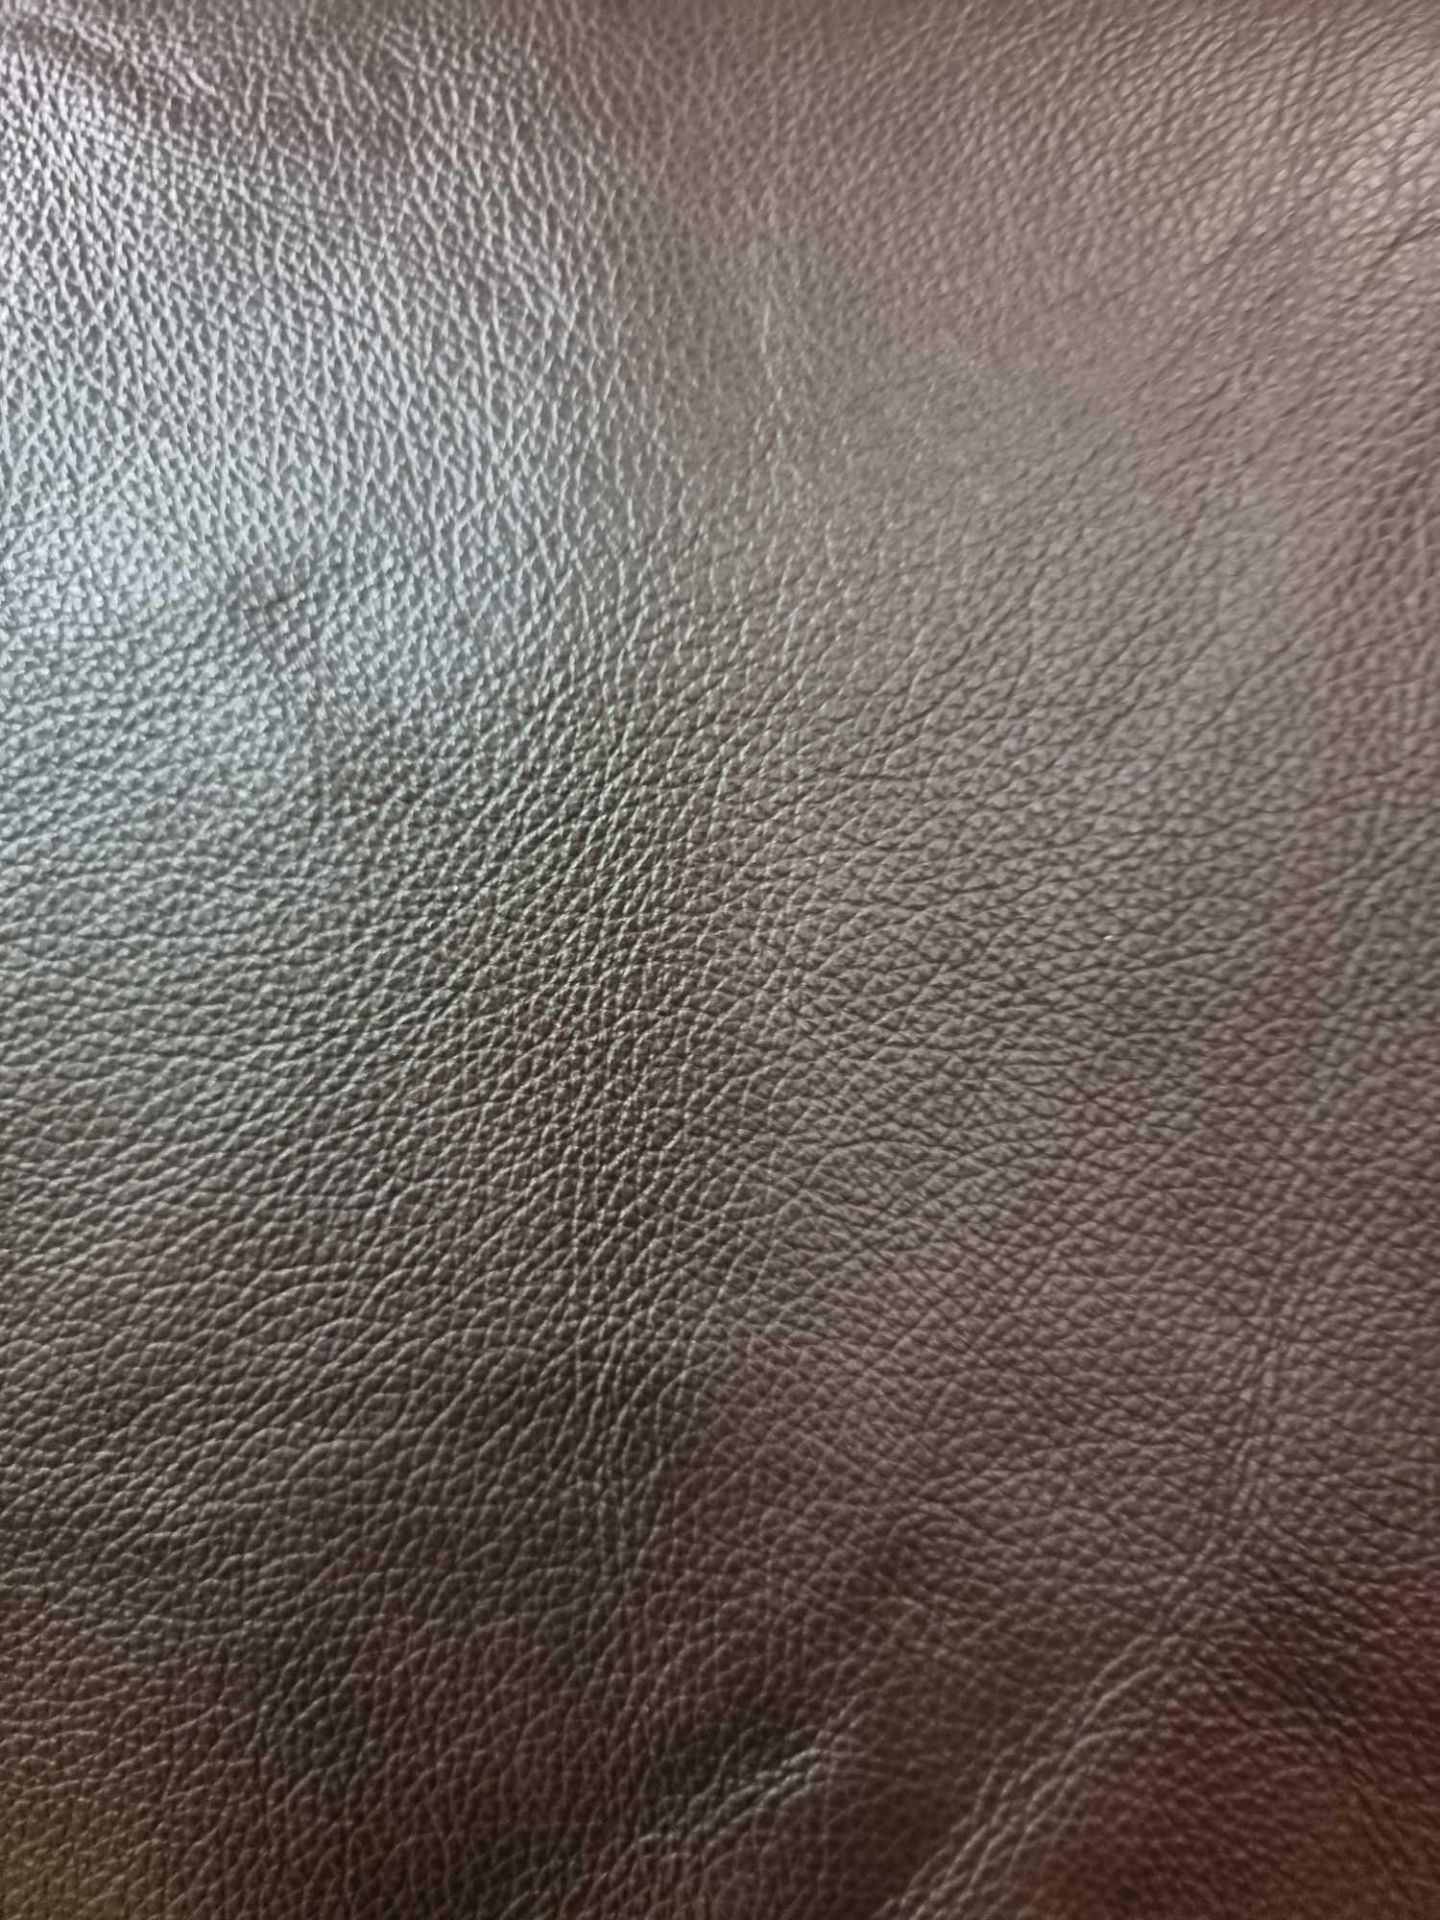 Mastrotto Dakota Chocolate Leather Hide approximately 3.96mÂ² 2.2 x 1.8cm - Bild 2 aus 2